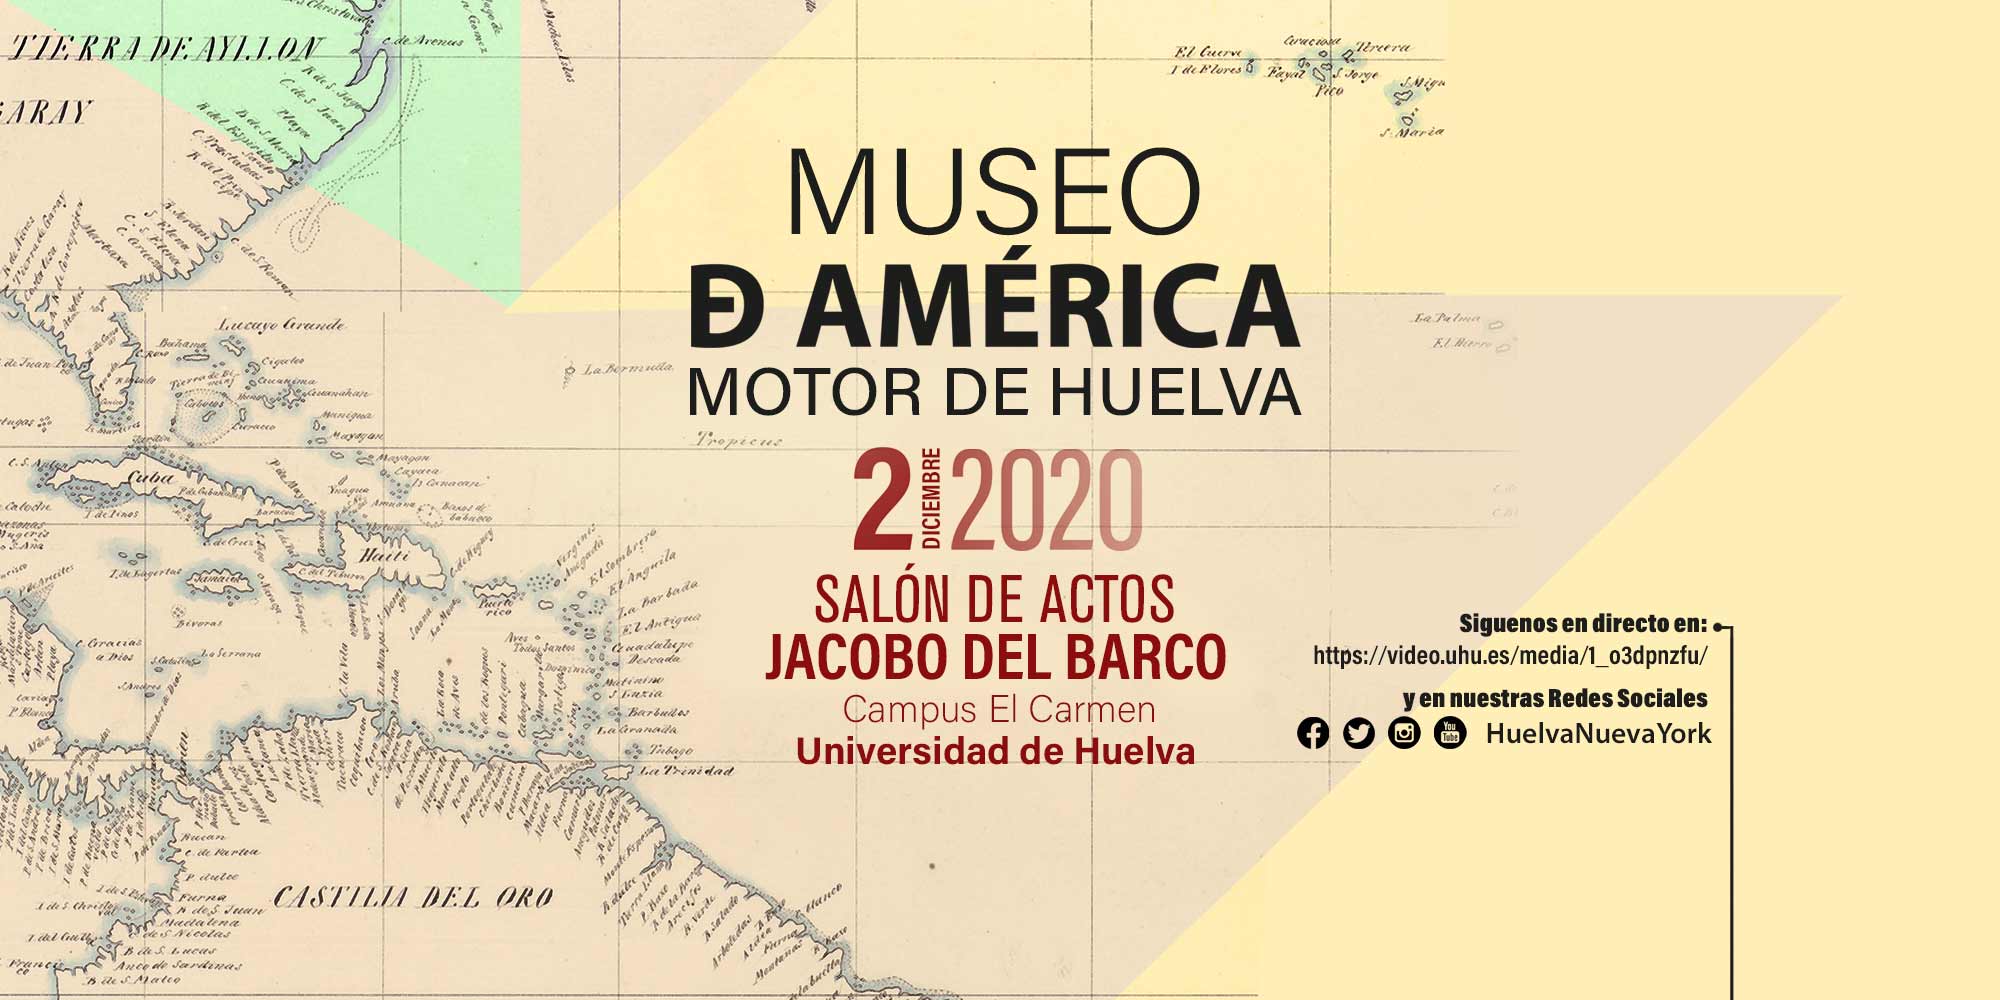 Jornadas "Museo de América", motor de Huelva